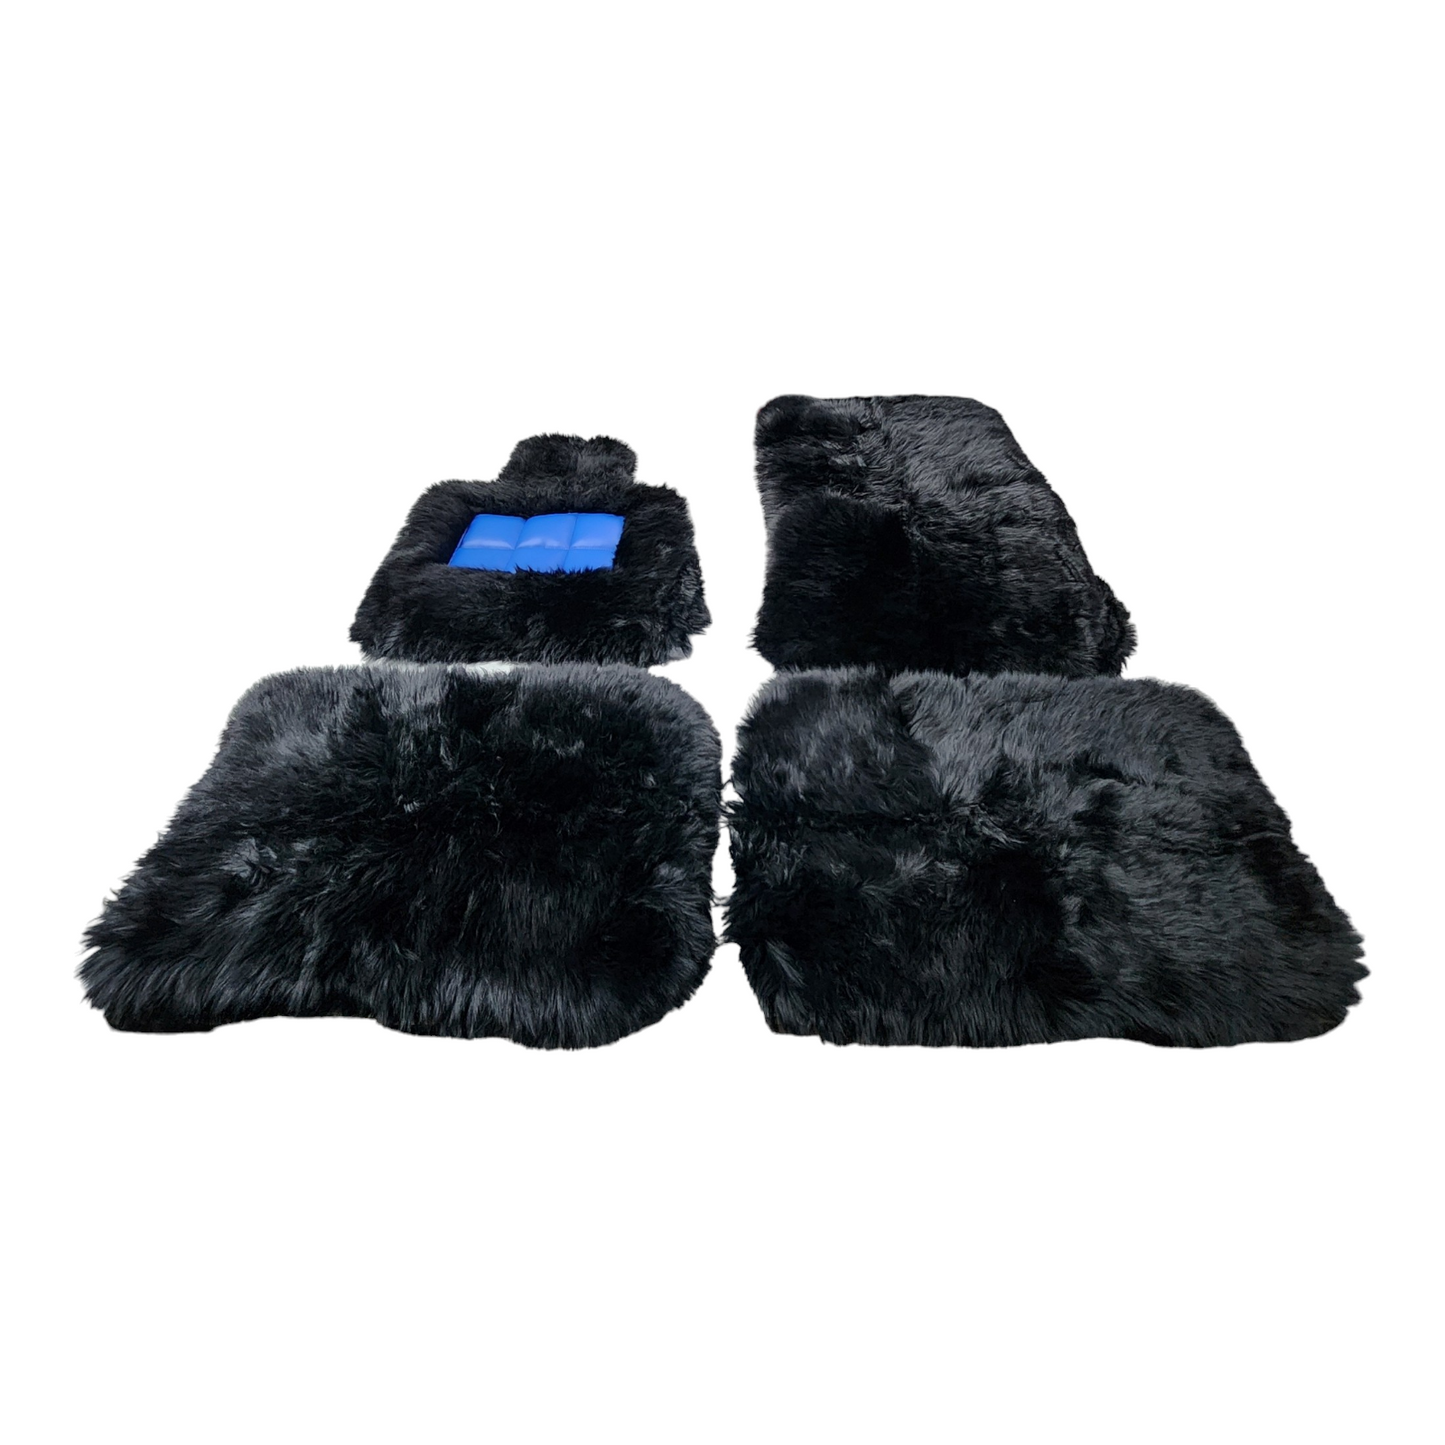 Genuine Long Wool Black Sheepskin Floor Mats Cobalto Blue Trim custom fits Rolls Royce - Cullinan, Ghost, Phantom, Wraith, Dawn, Spectre